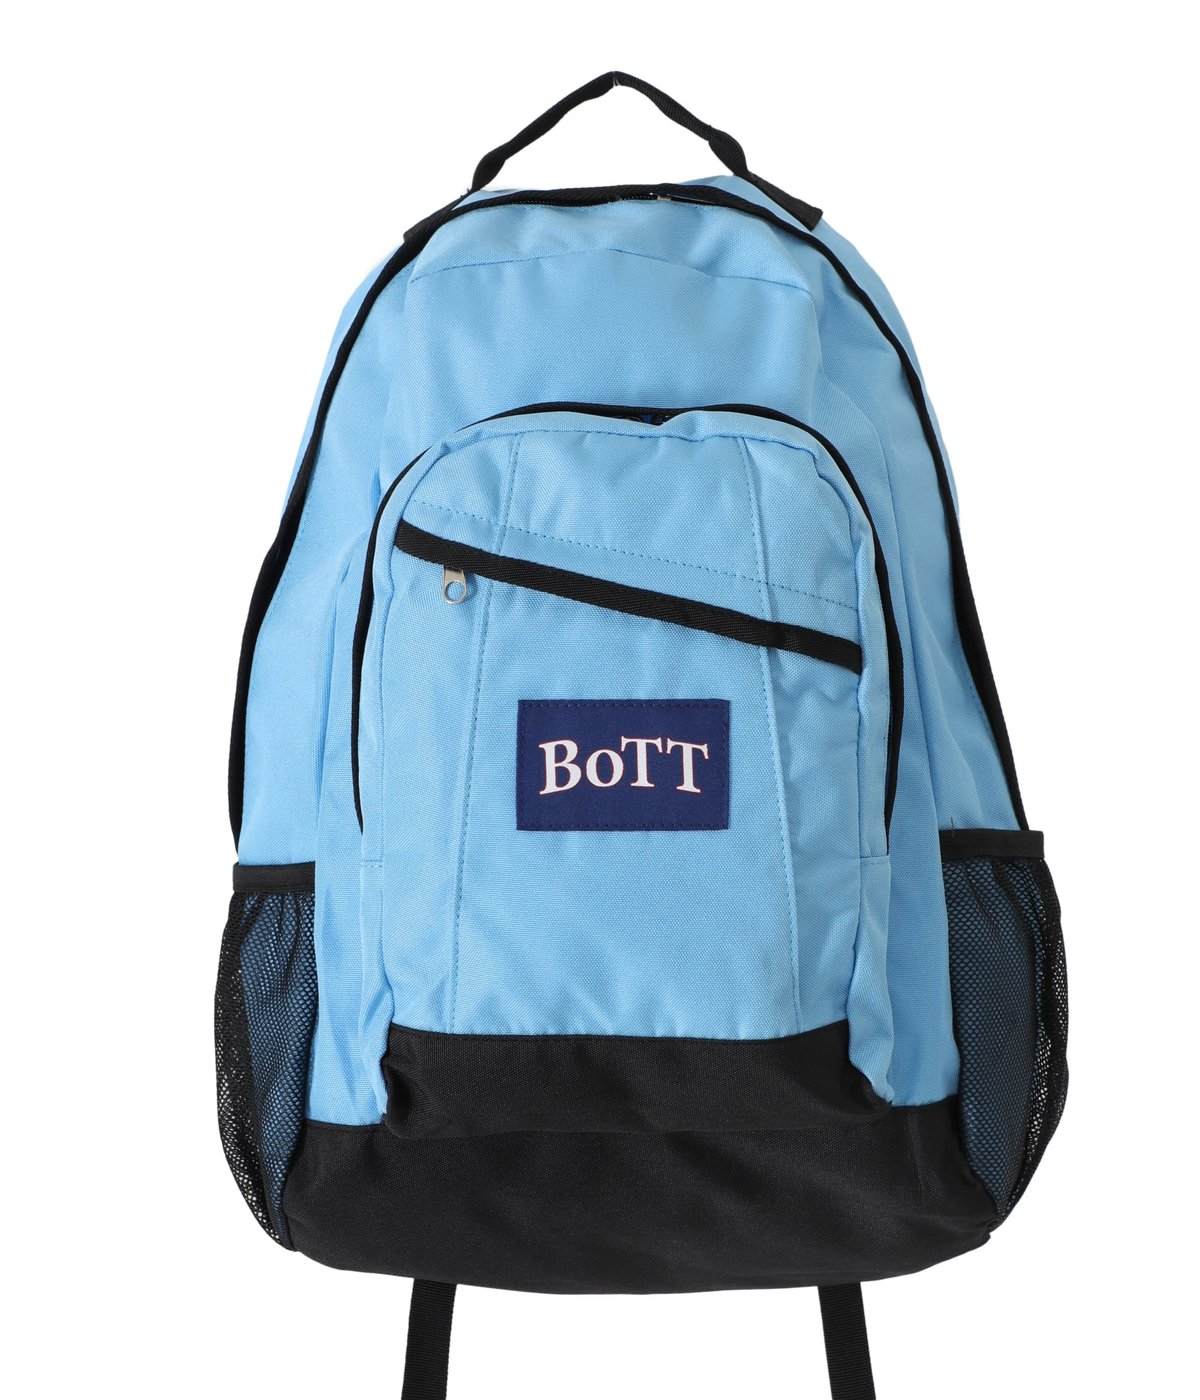 BoTT Sport Backpack Blue | www.innoveering.net